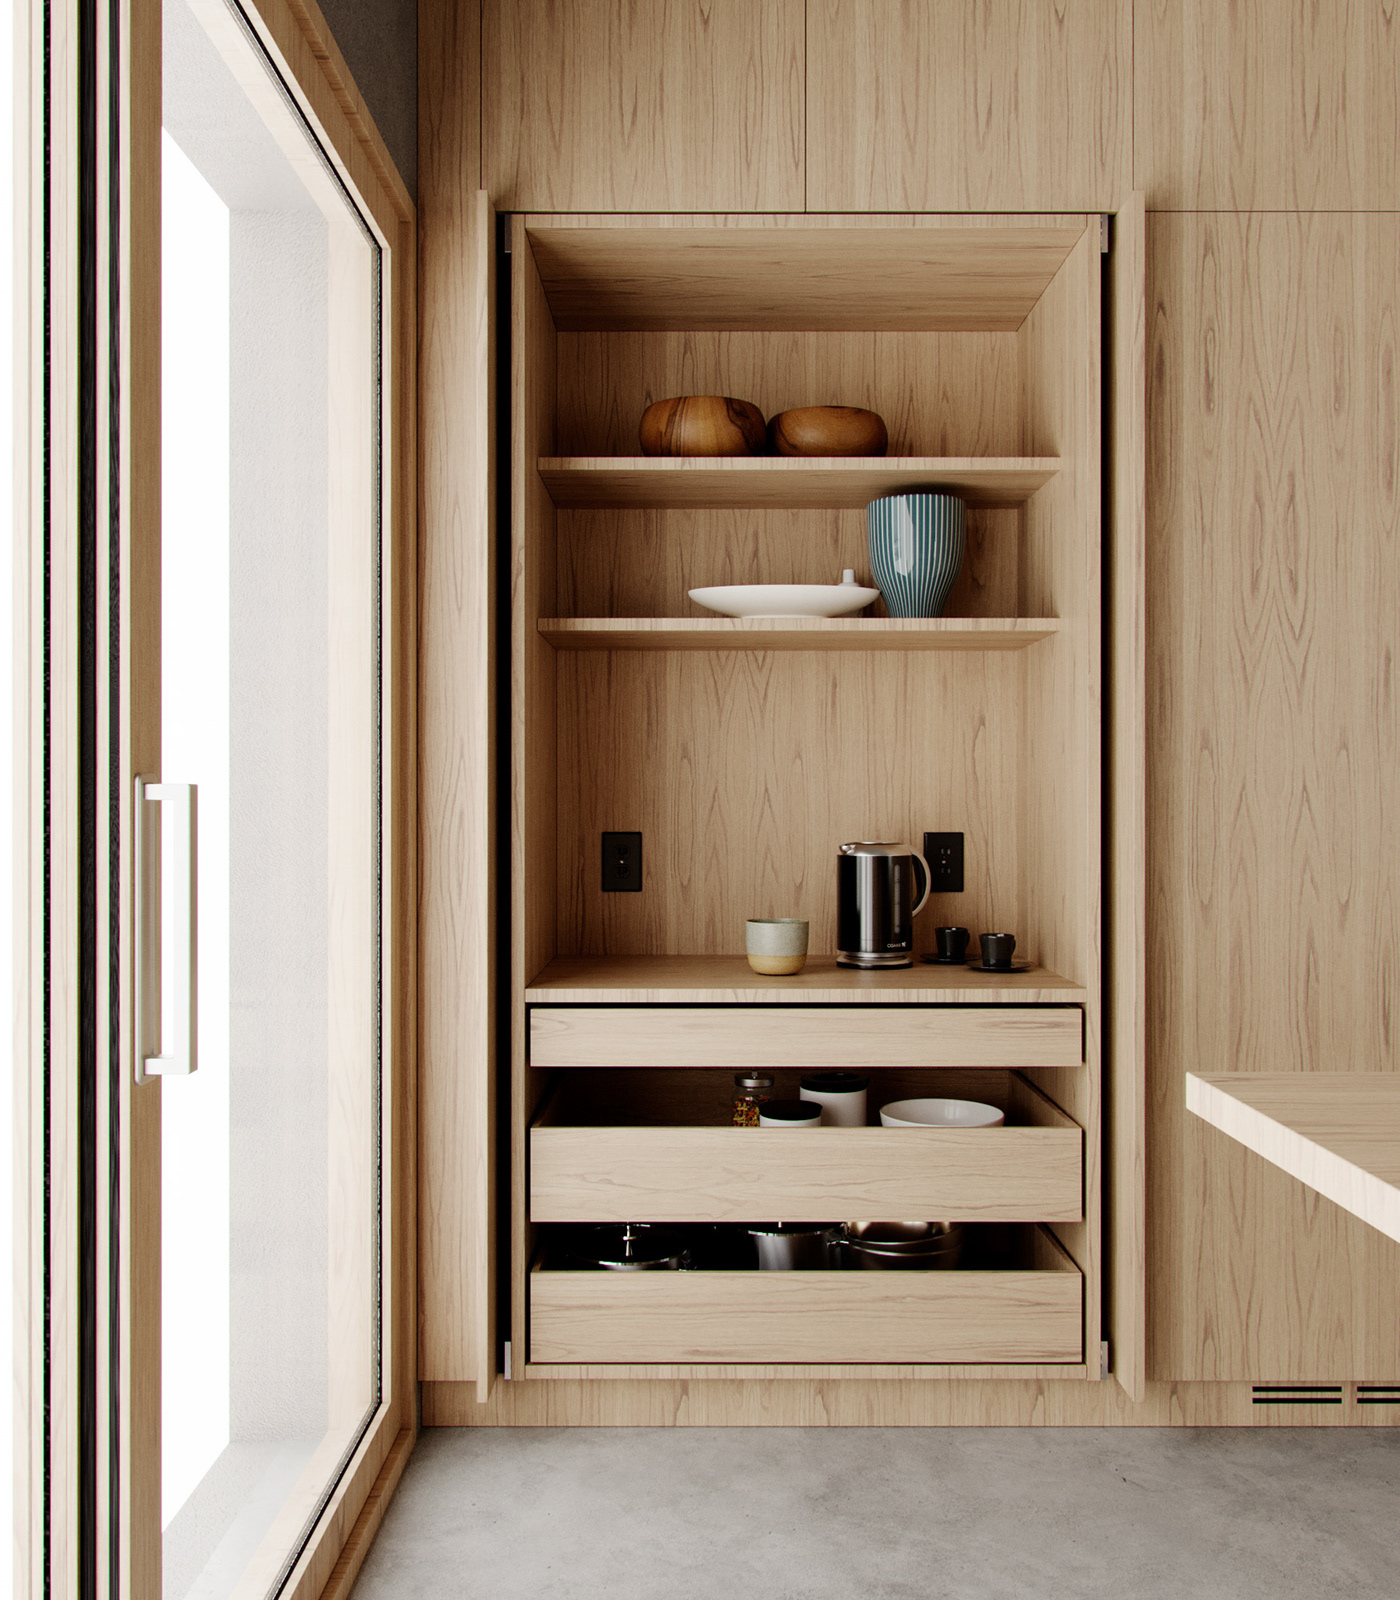 3D CGI cinema 4d corona render  interior design  kitchen nordic visualization warm wood